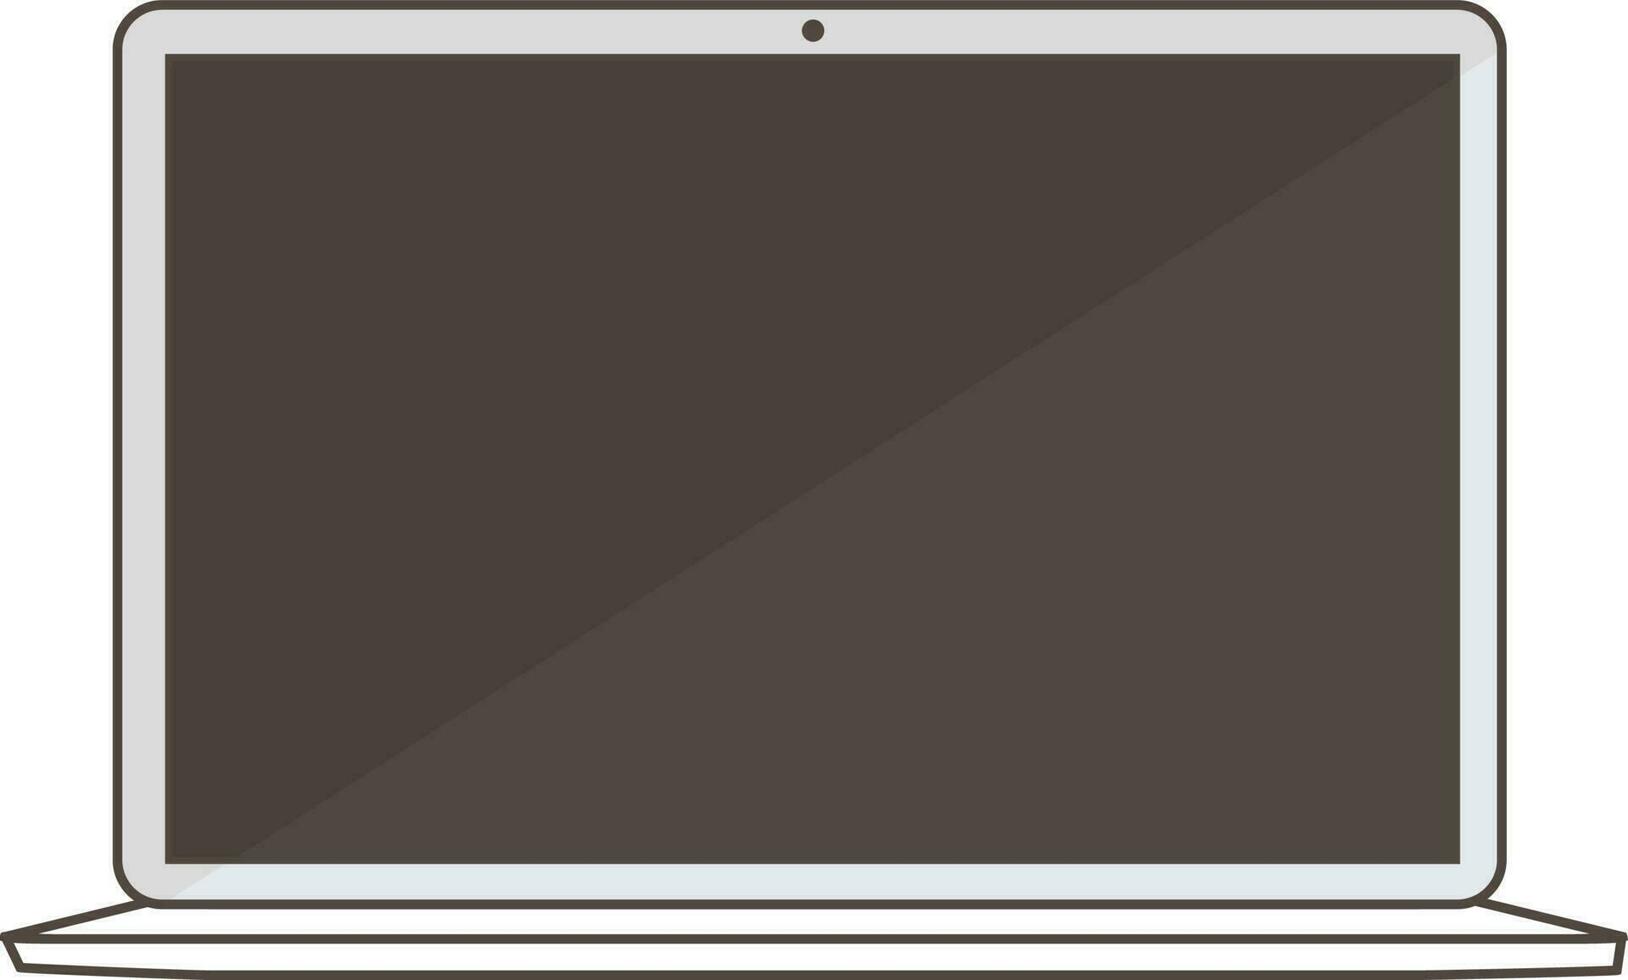 plano estilo pantalla de un ordenador portátil. vector